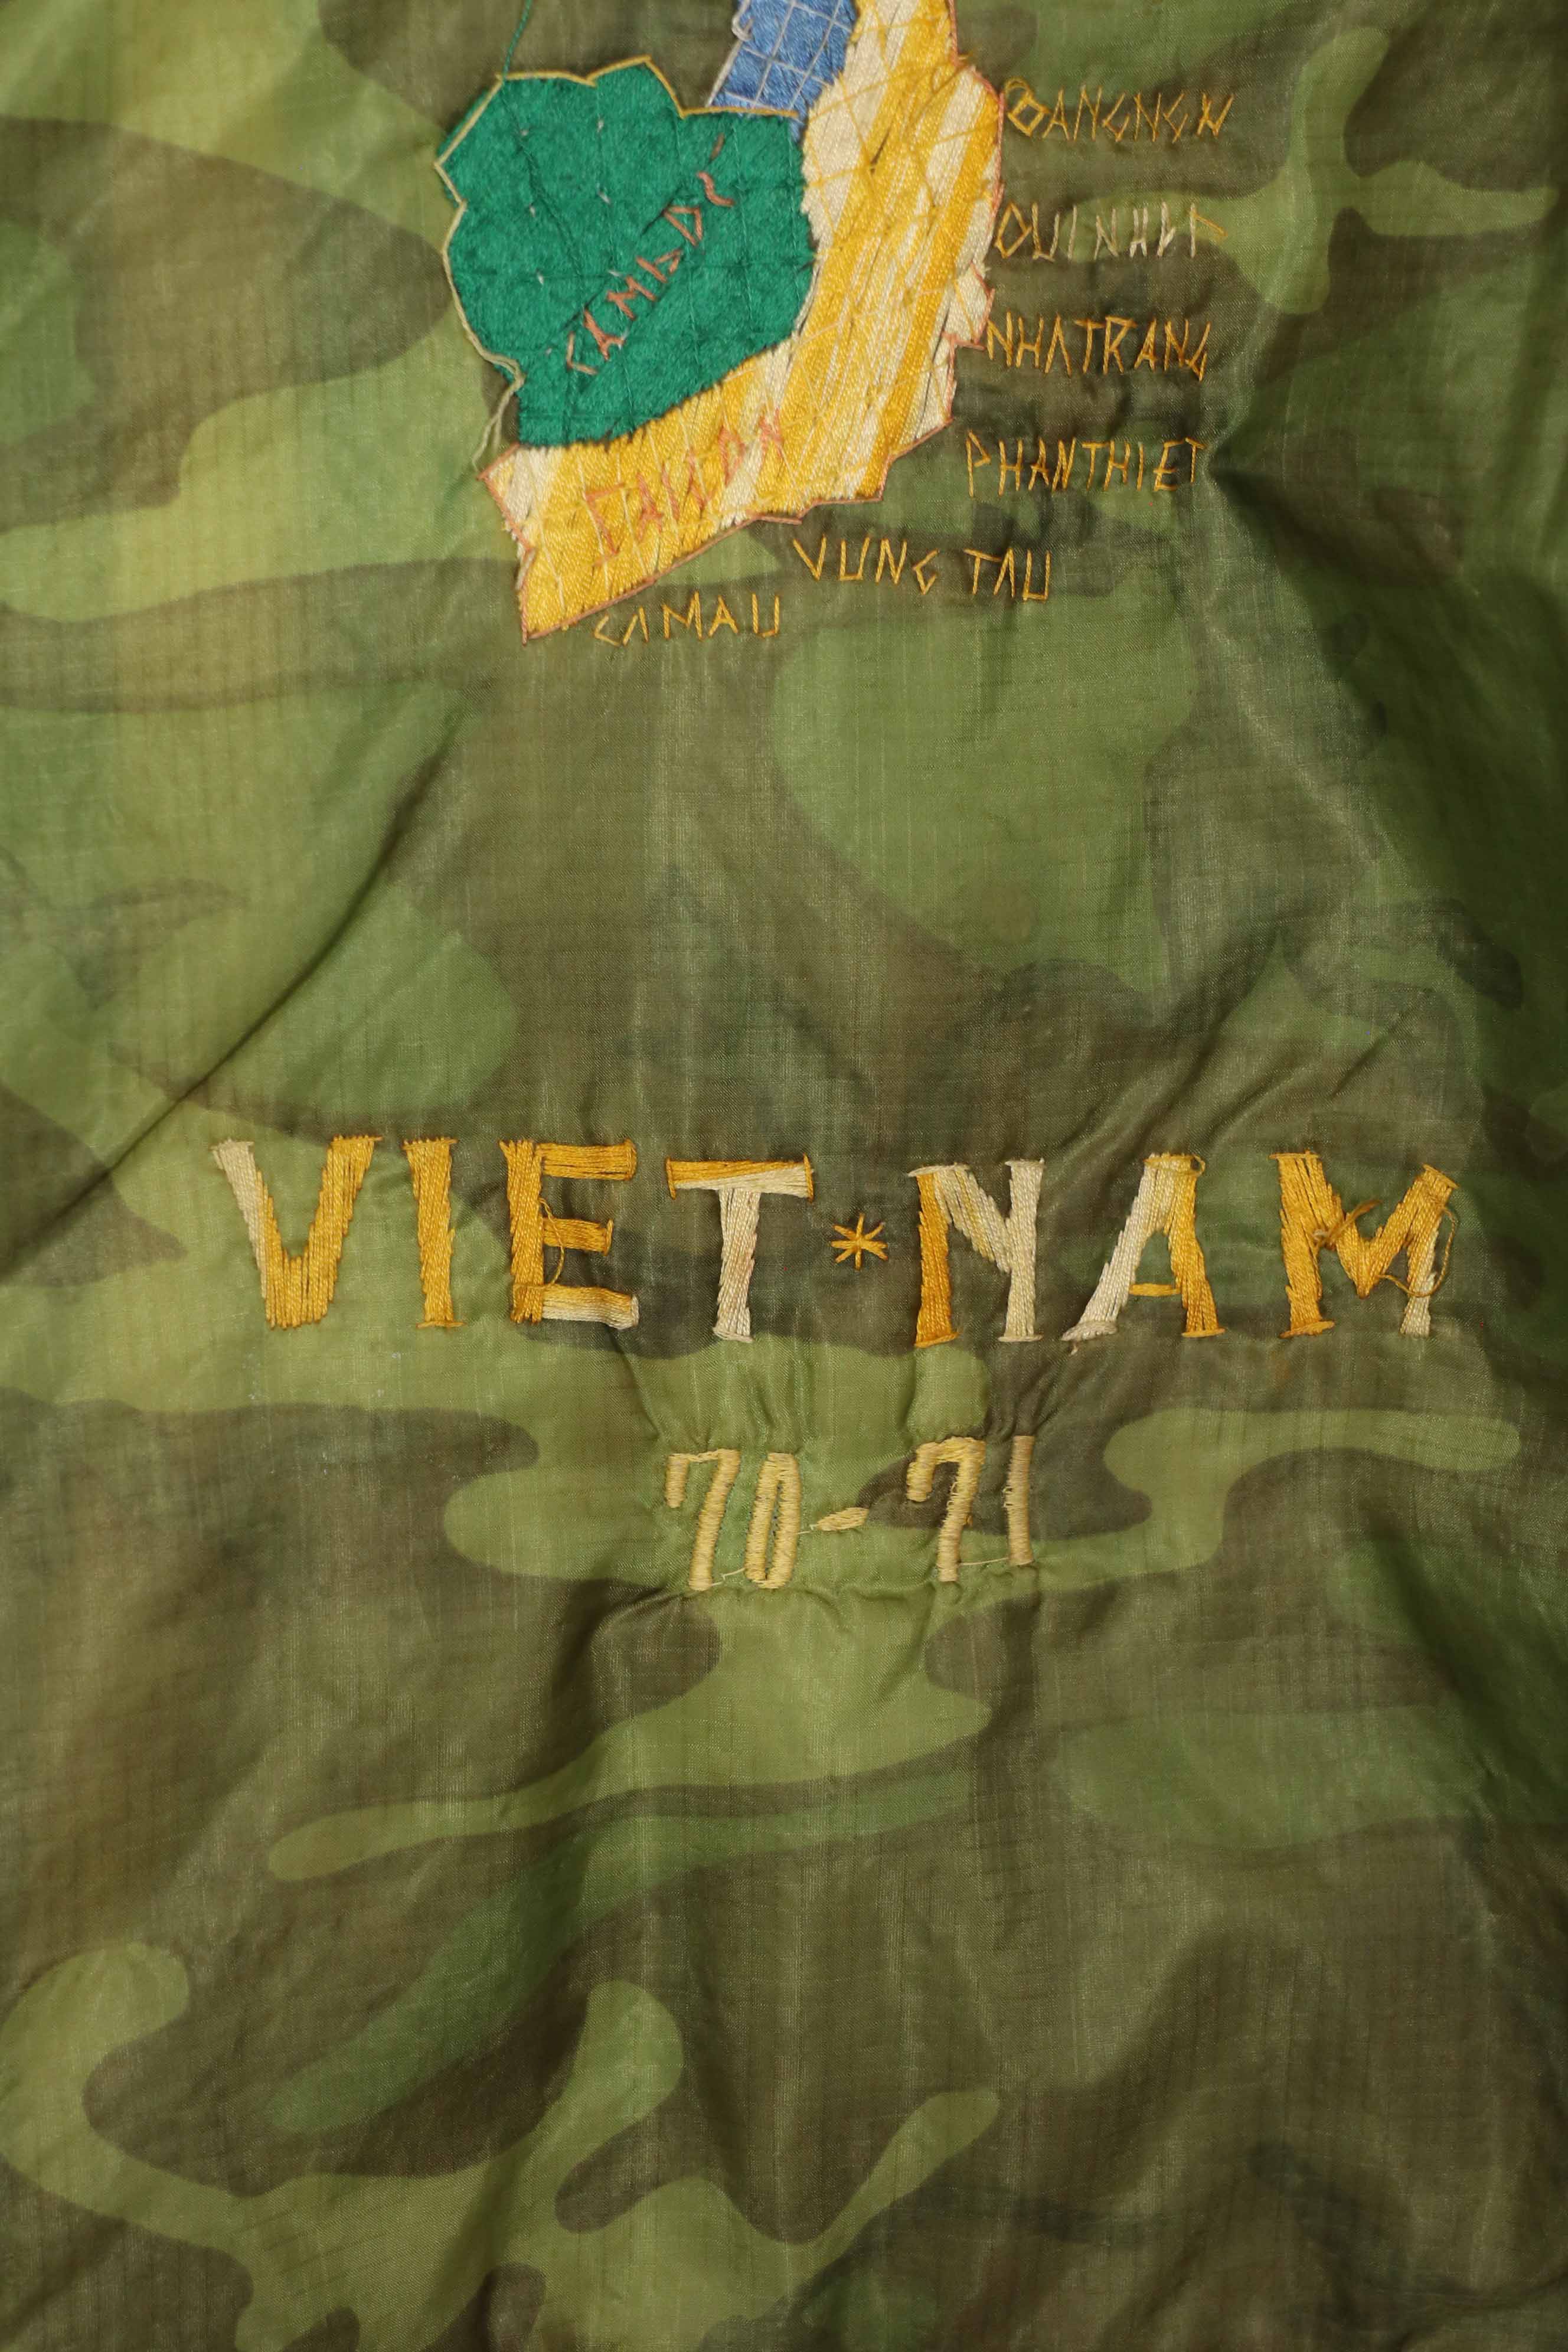 Real U.S. Army Poncho Liner Tour Jacket 1970-1971 TAY NINH CU CHI